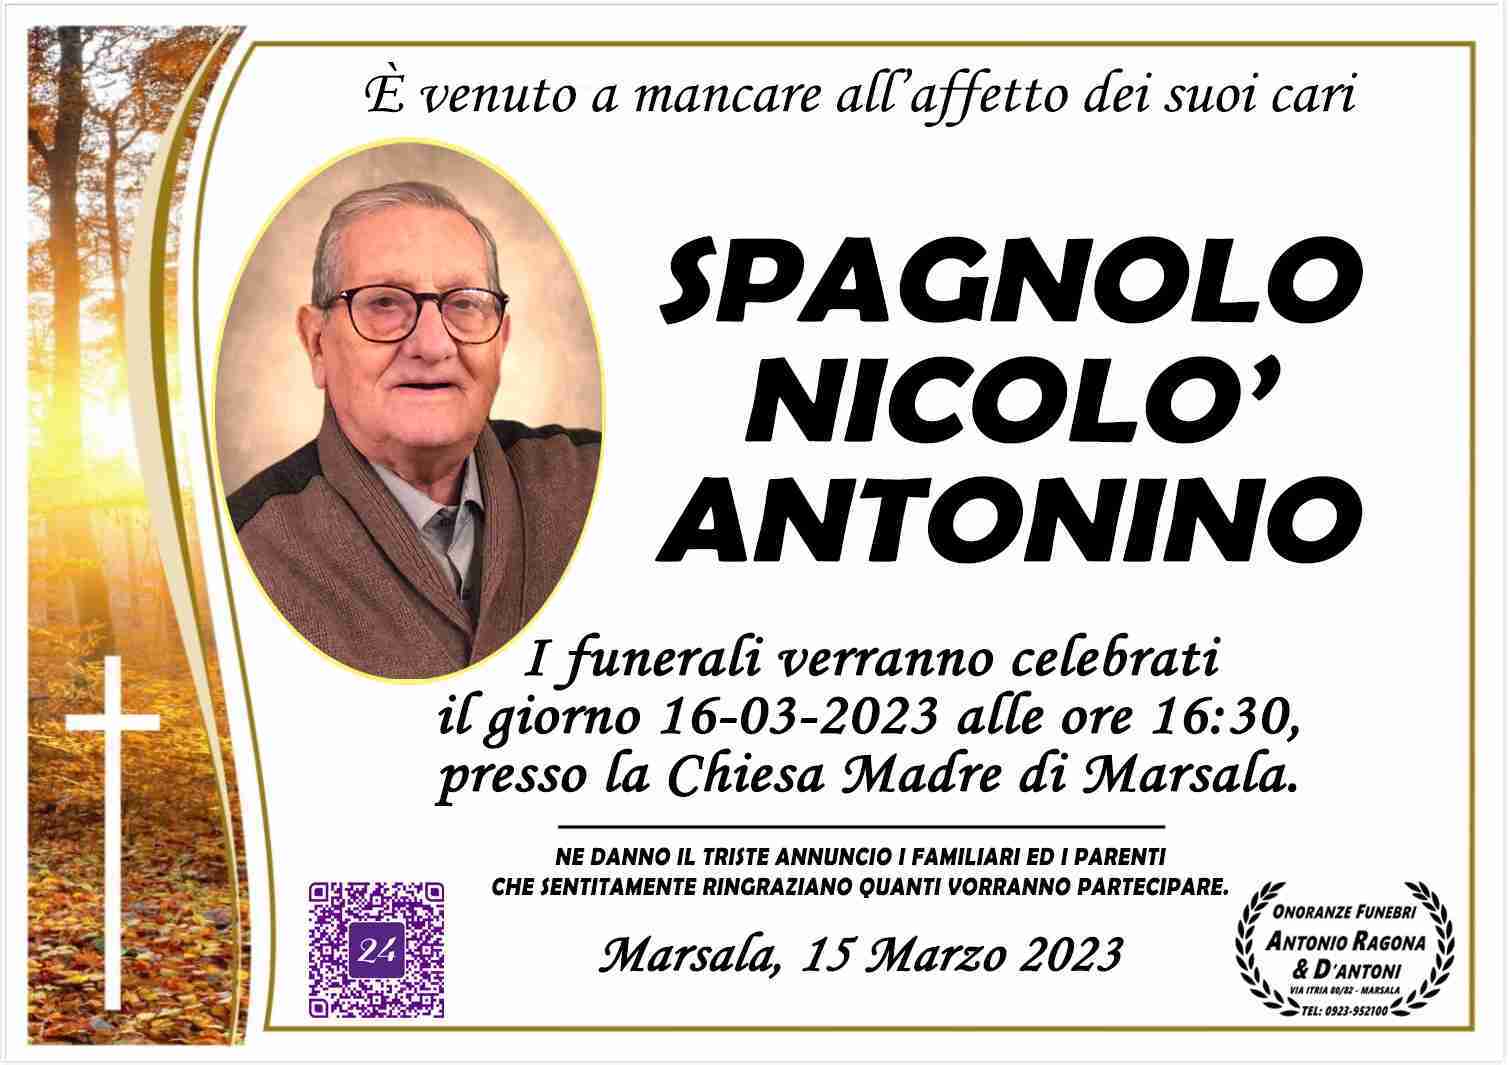 Nicolò Antonino Spagnolo